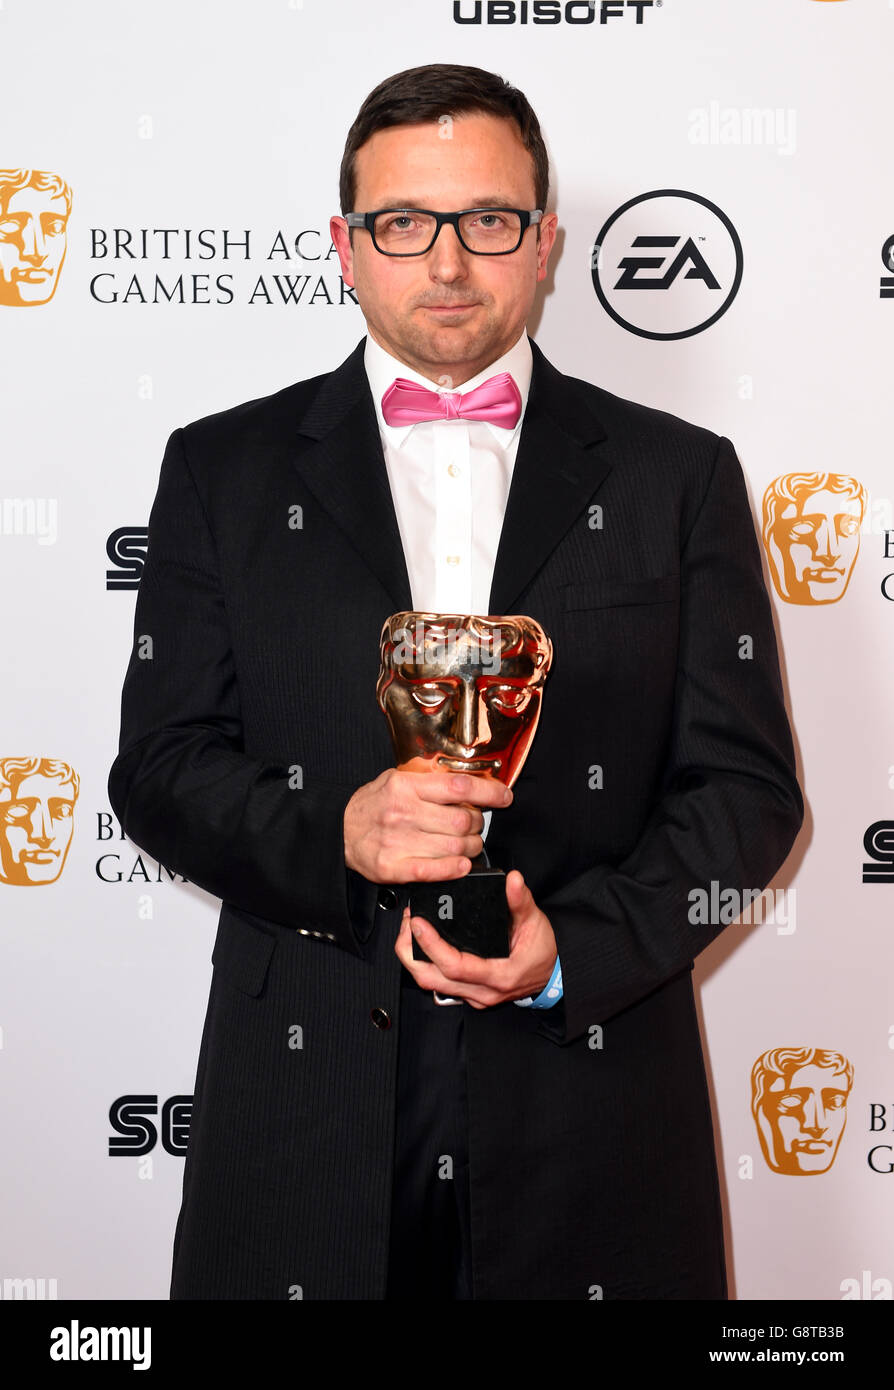 Naomi Kyle attending the British Academy Games Awards 2016, London